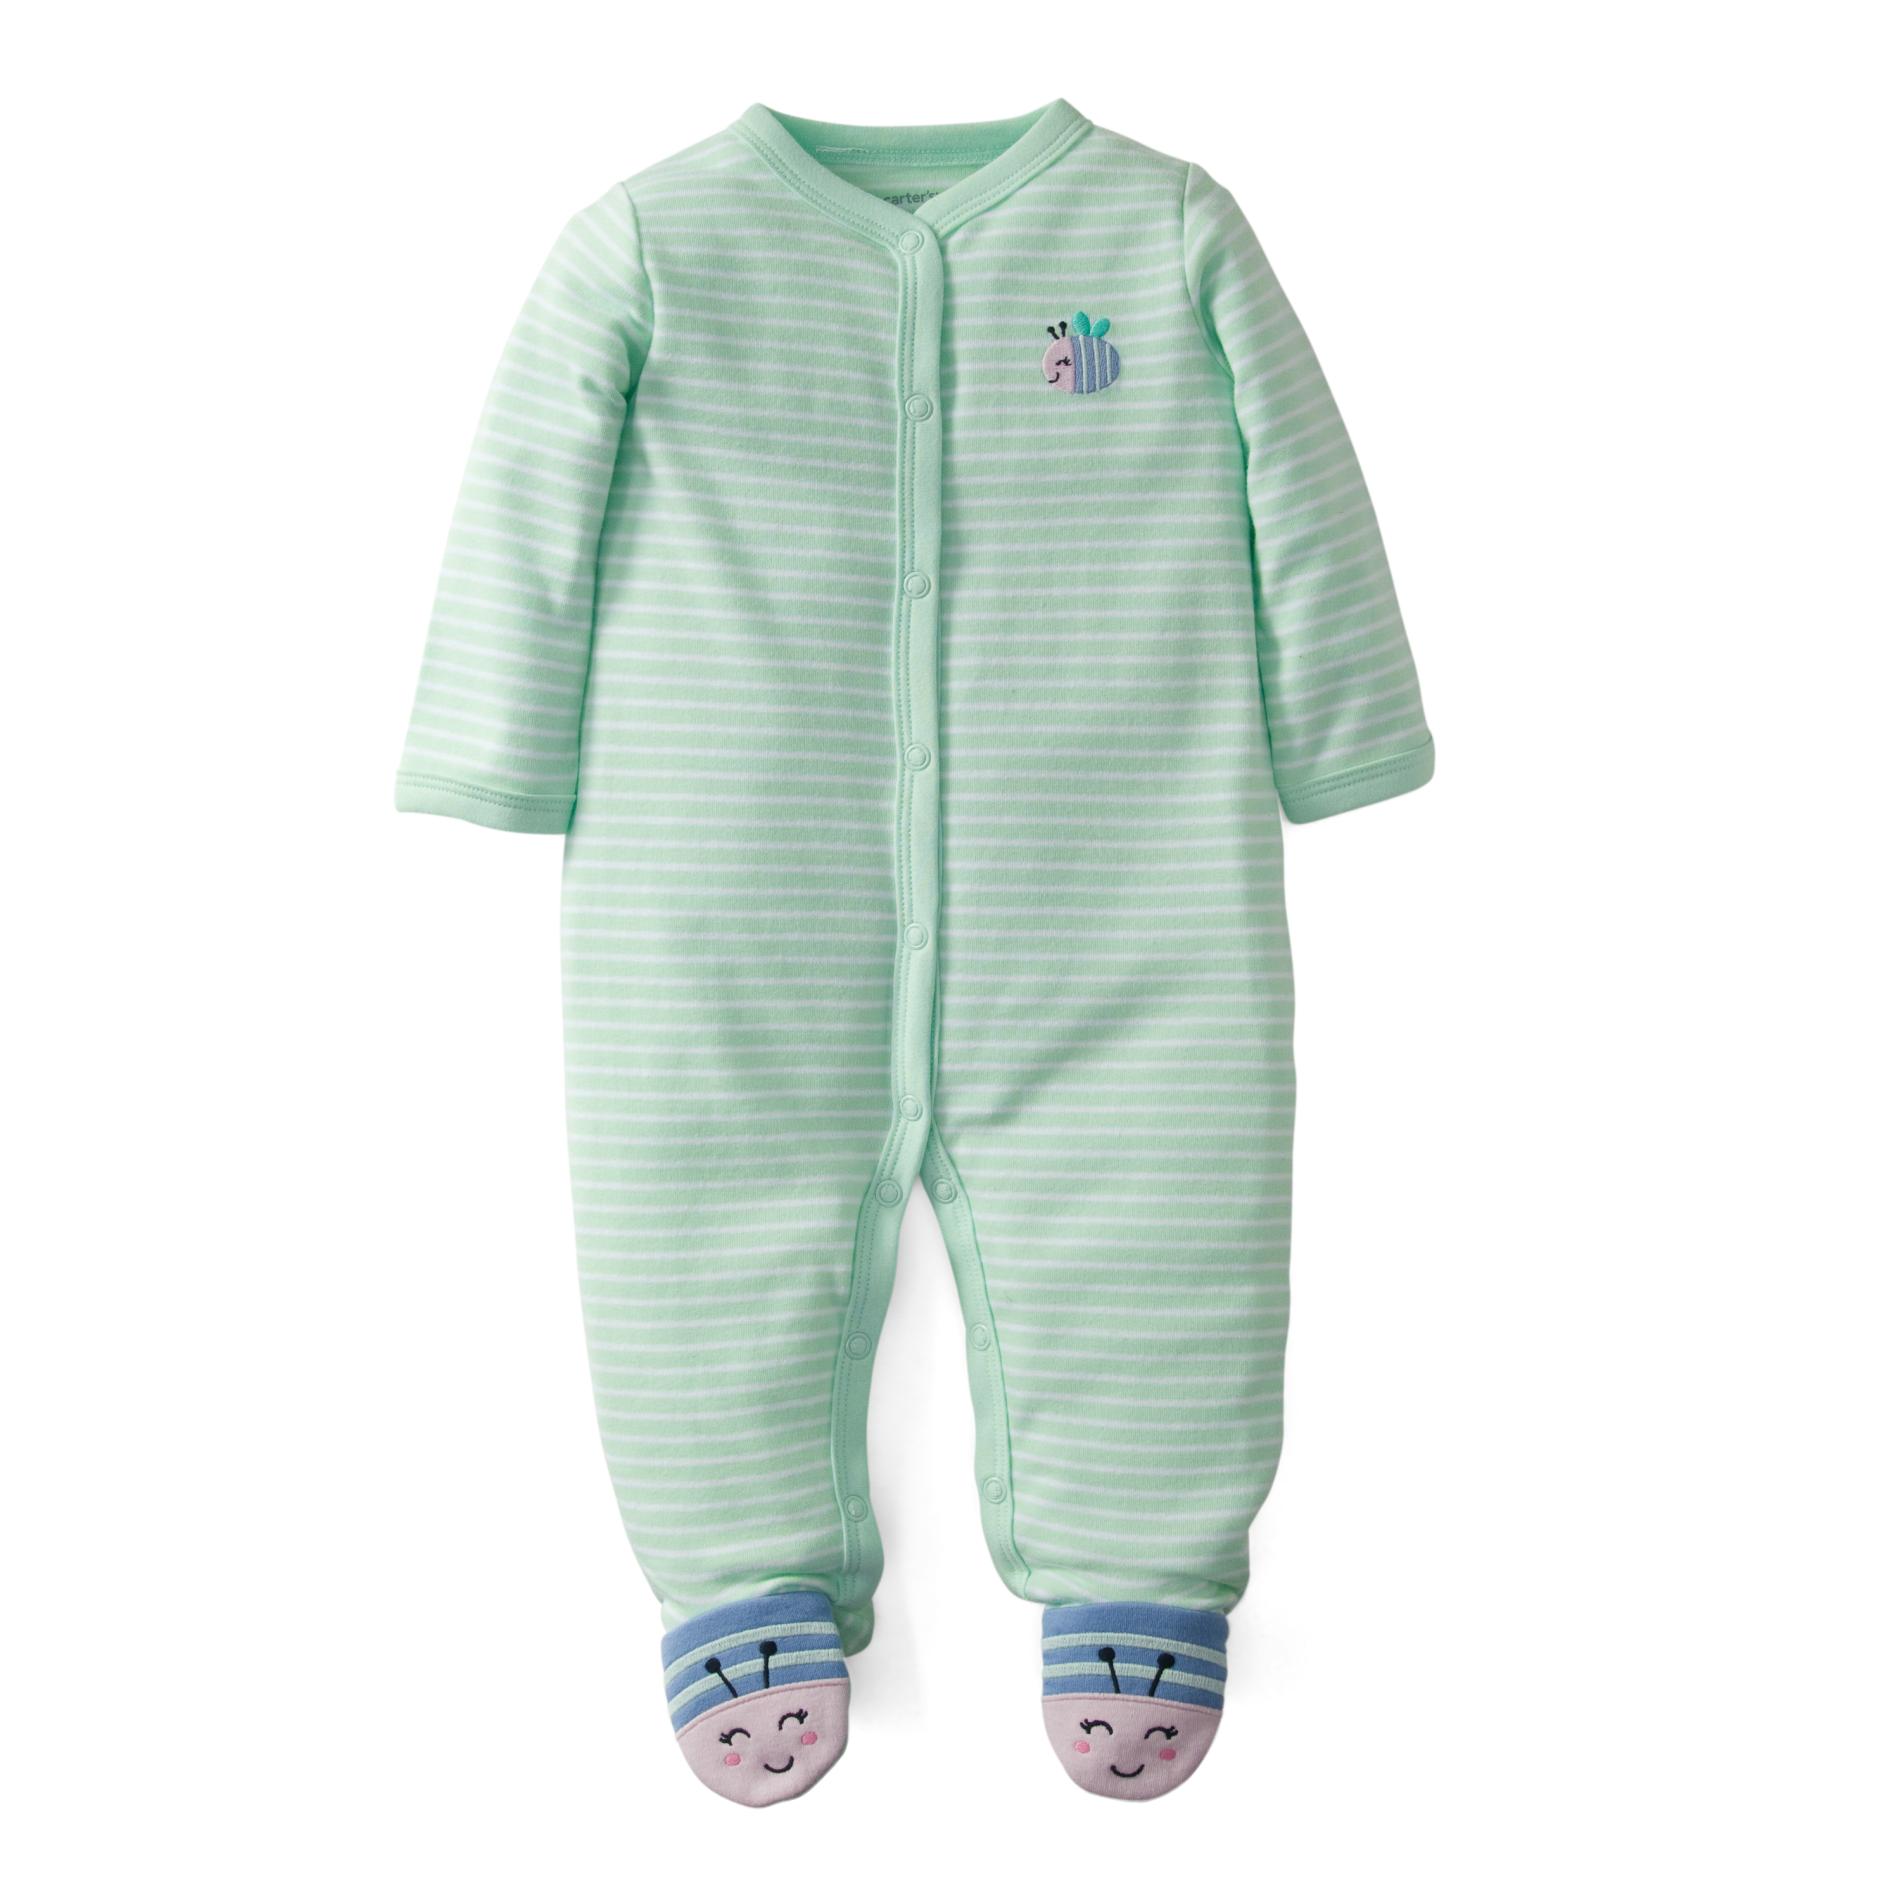 Carter's Newborn Girl's Footed Pajamas - Honey Bee